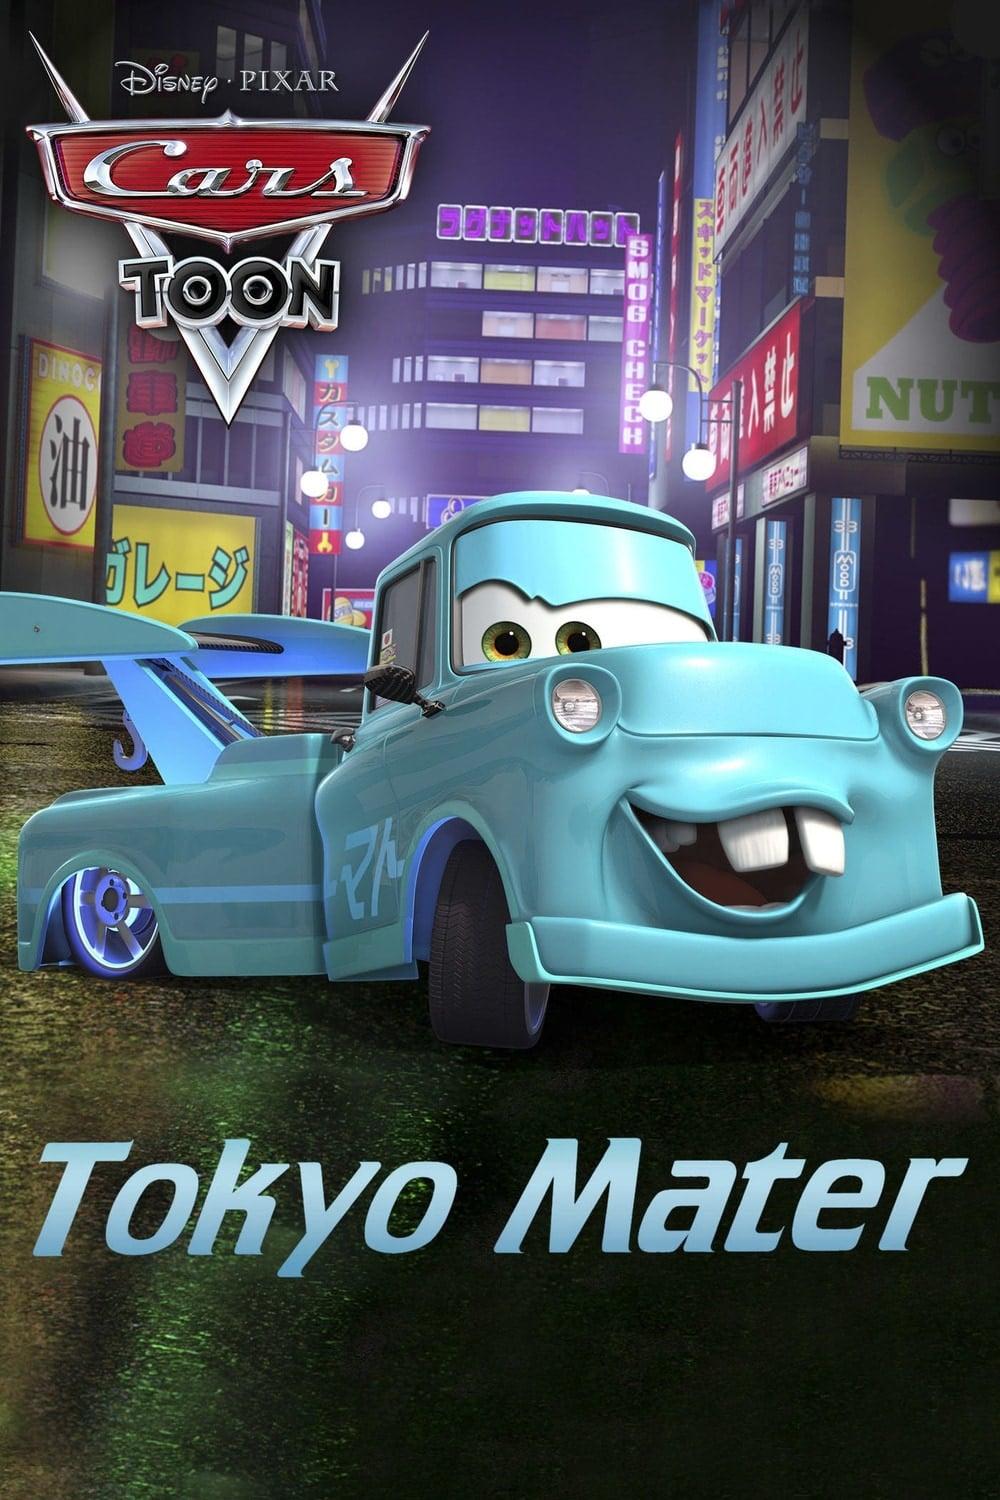 Tokyo Mater poster